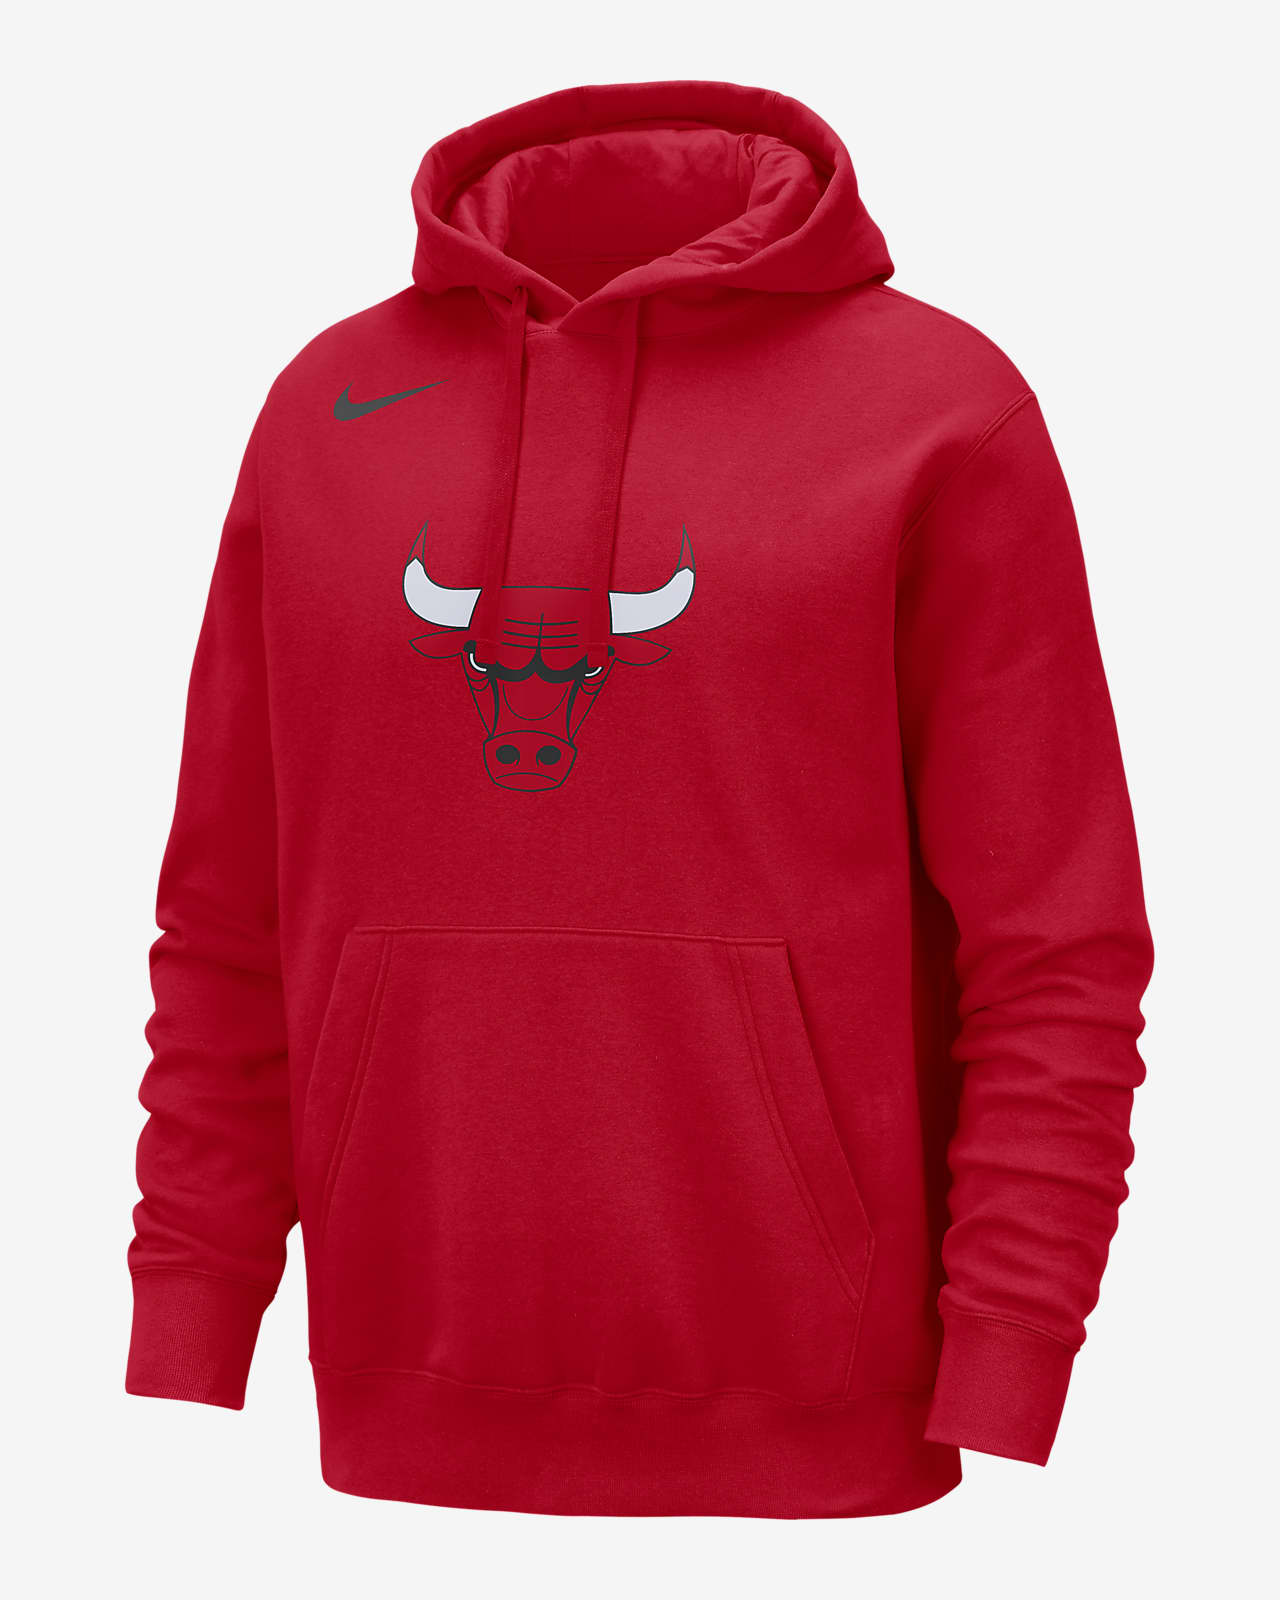 Chicago Bulls Club Sudadera con capucha Nike de la NBA - Hombre